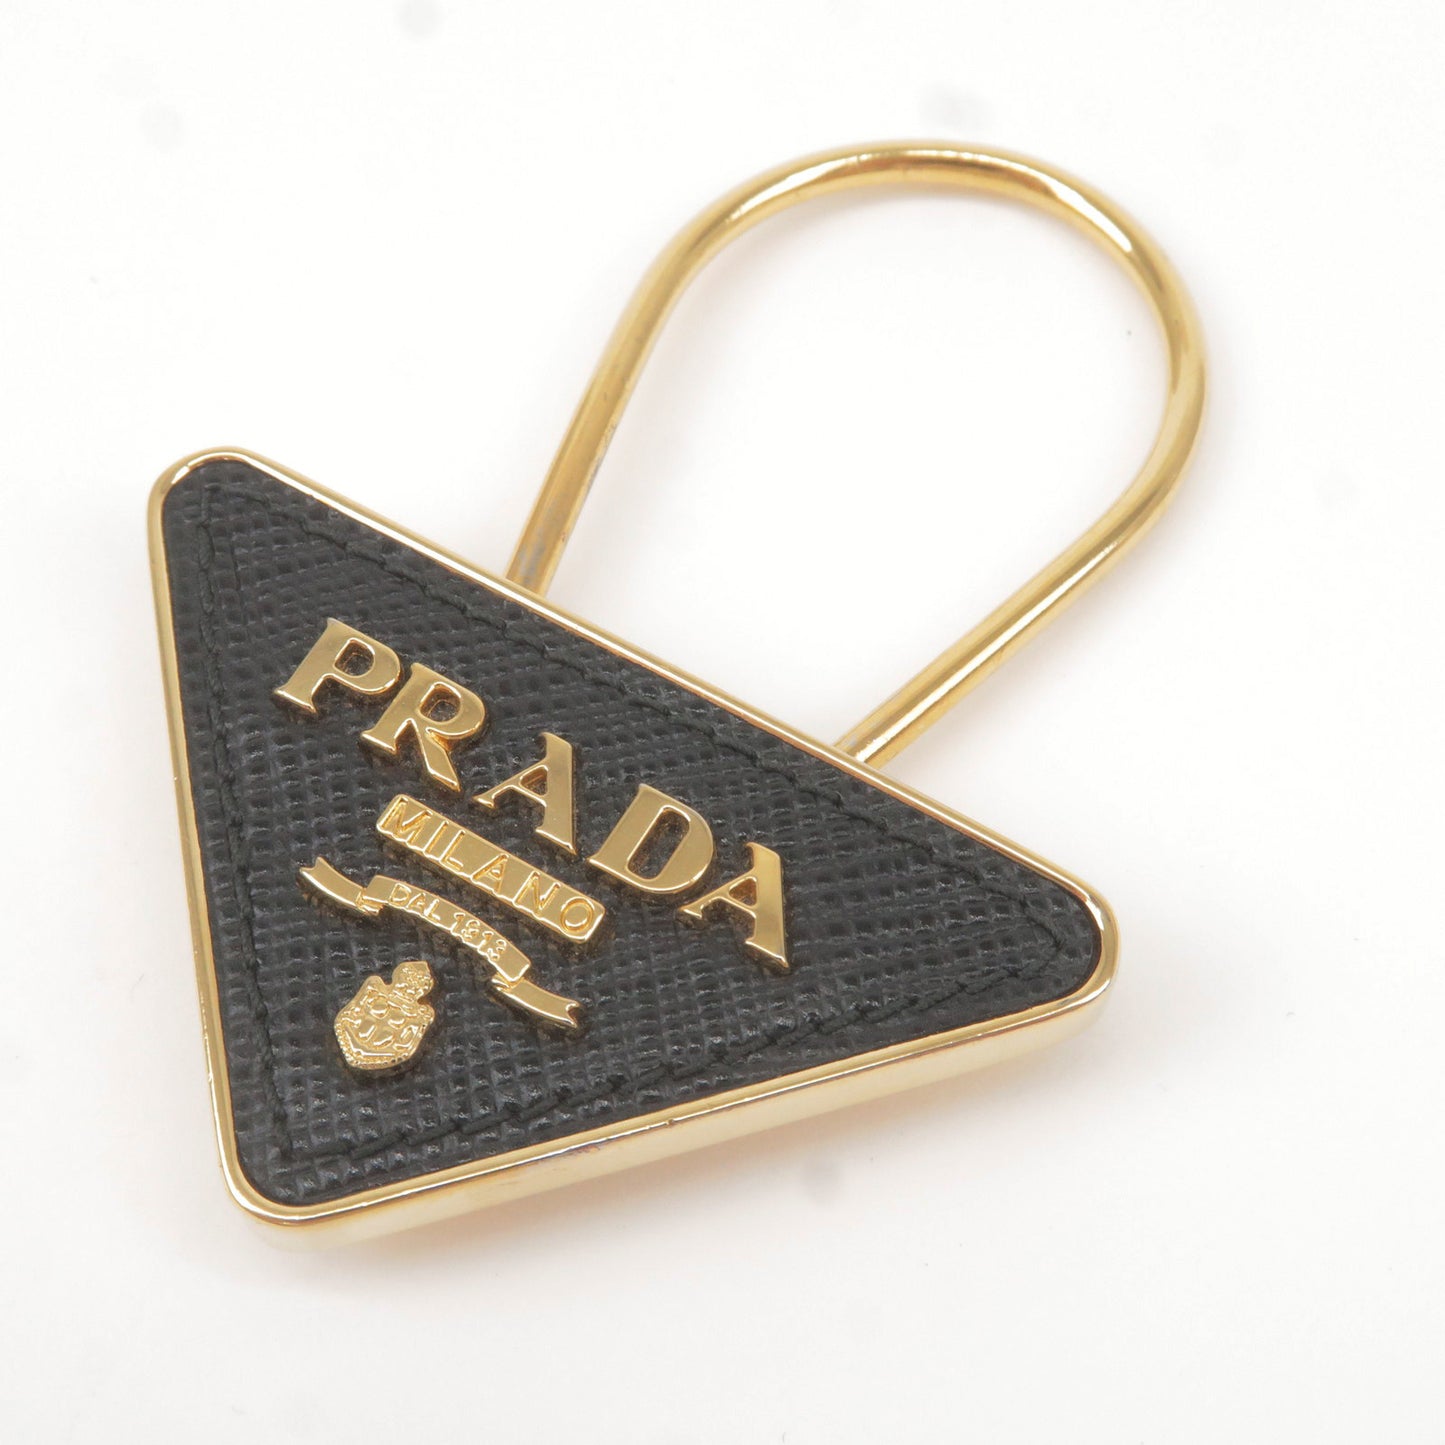 PRADA Logo Metal Leather Charm Key Charm Black Gold 1PP301